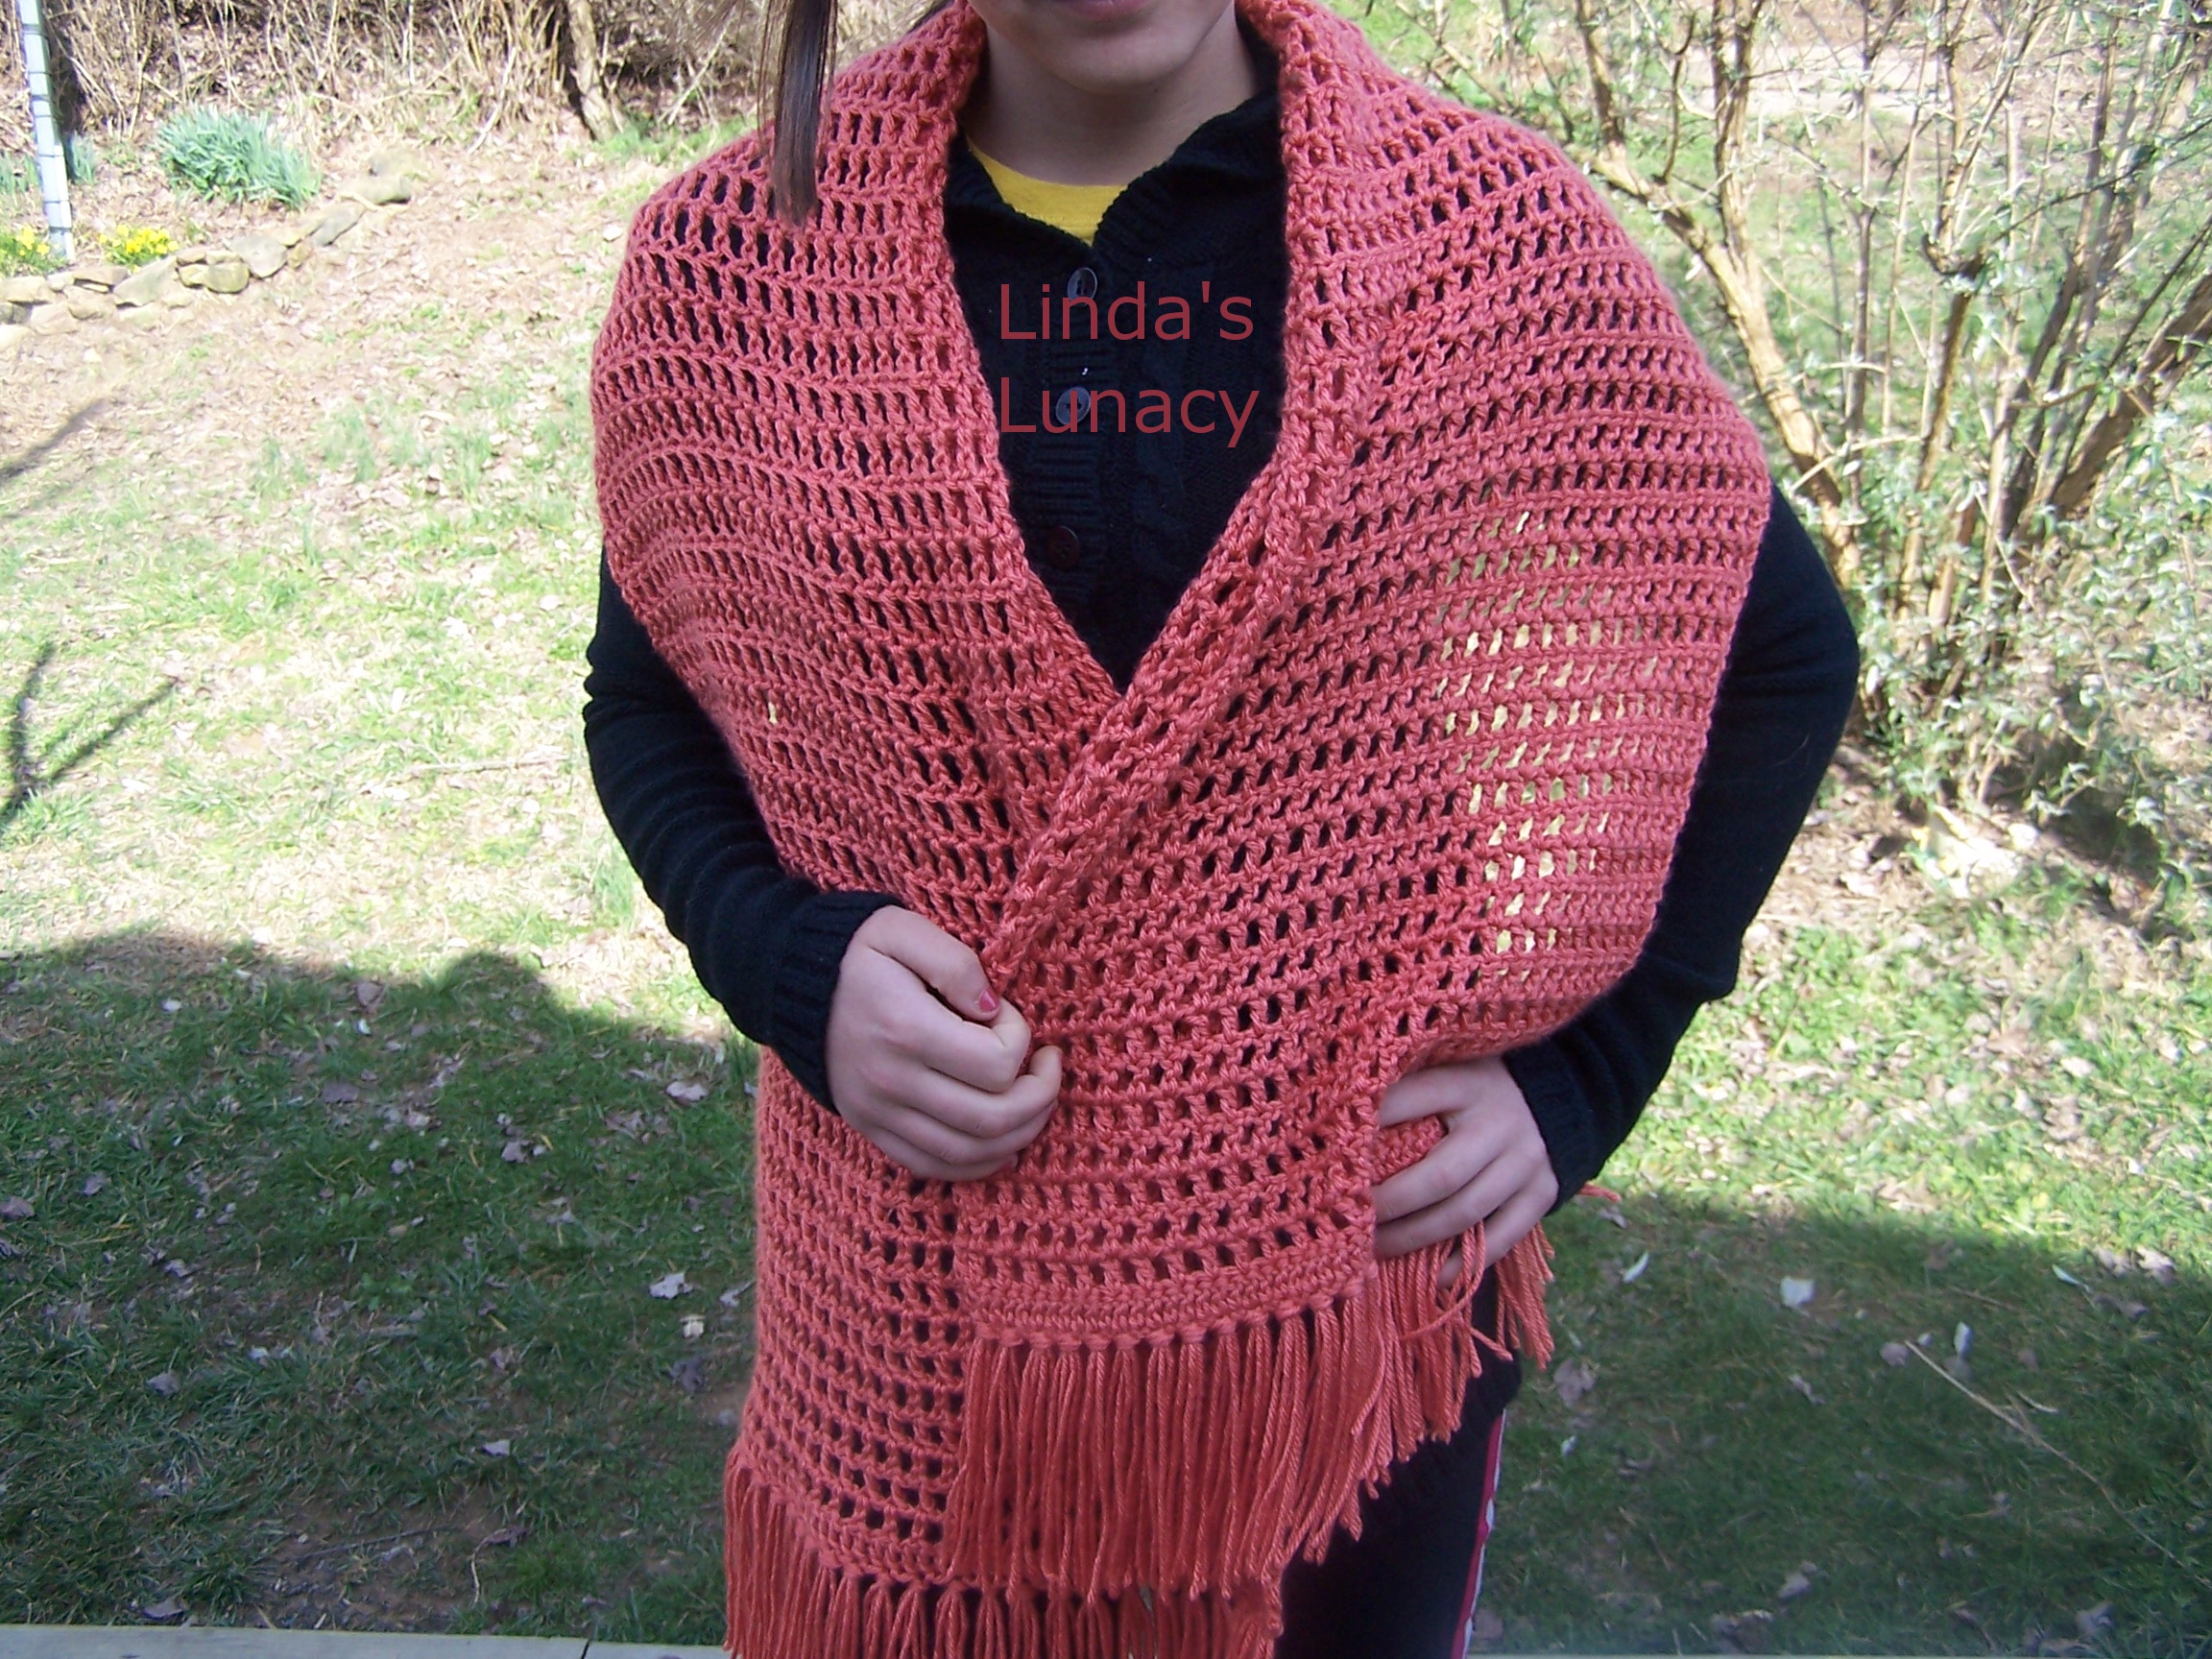 Crocheted Prayer Shawl - Linda's Lunacy